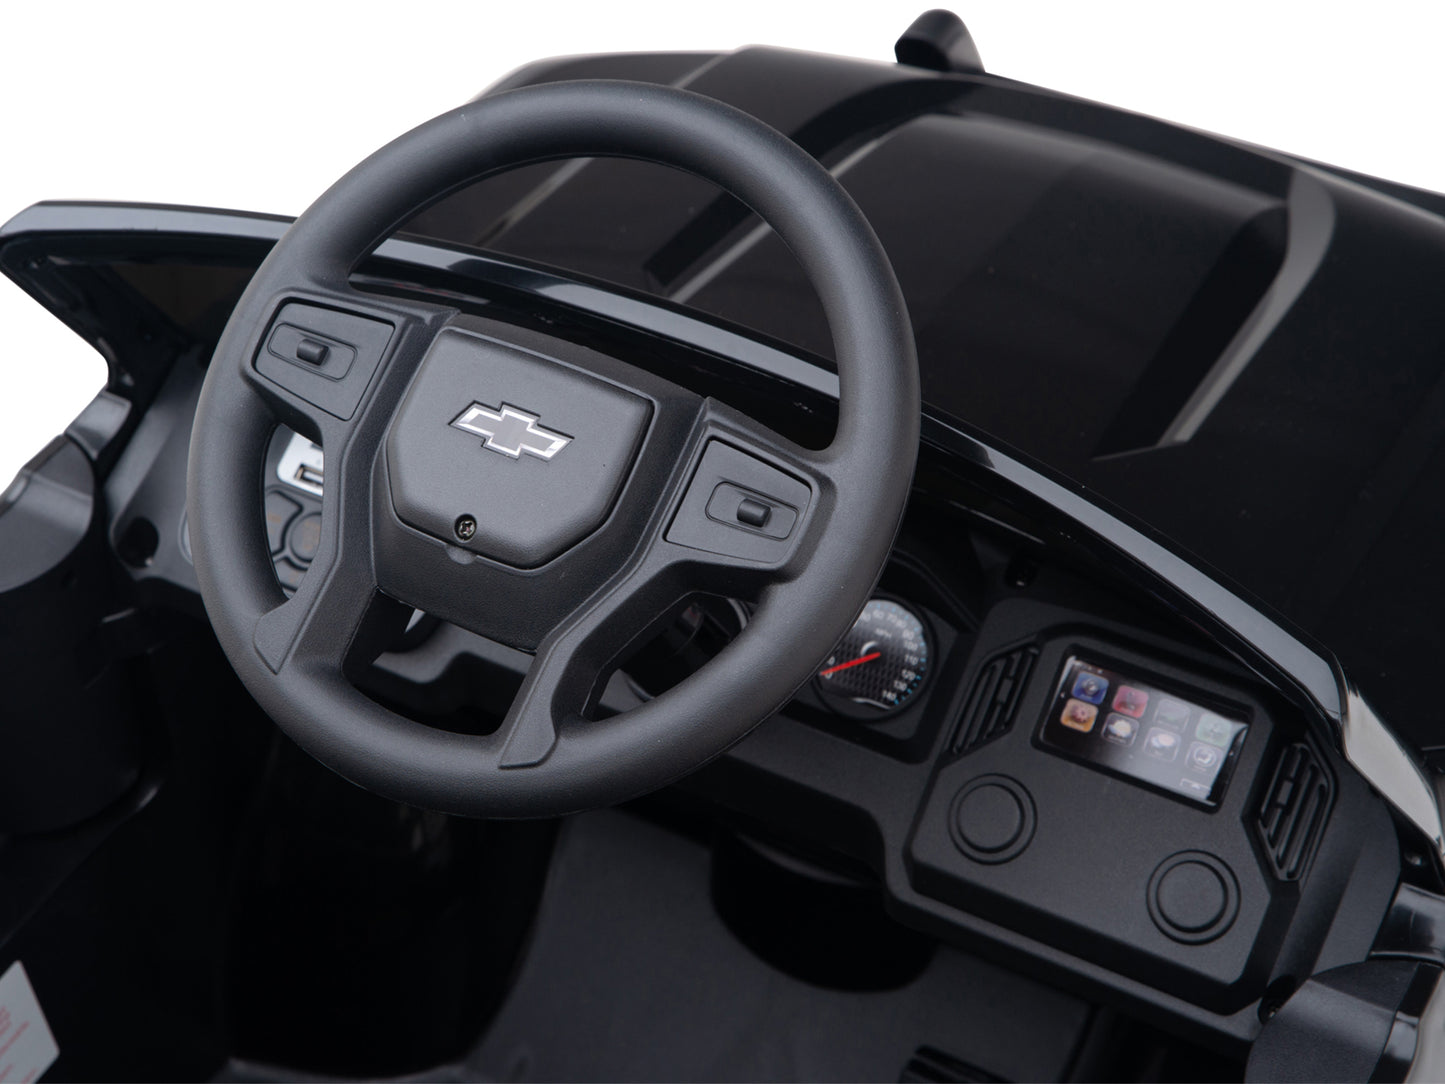 24V Chevrolet Silverado Lifted Ride On Truck with Remote Control – Black